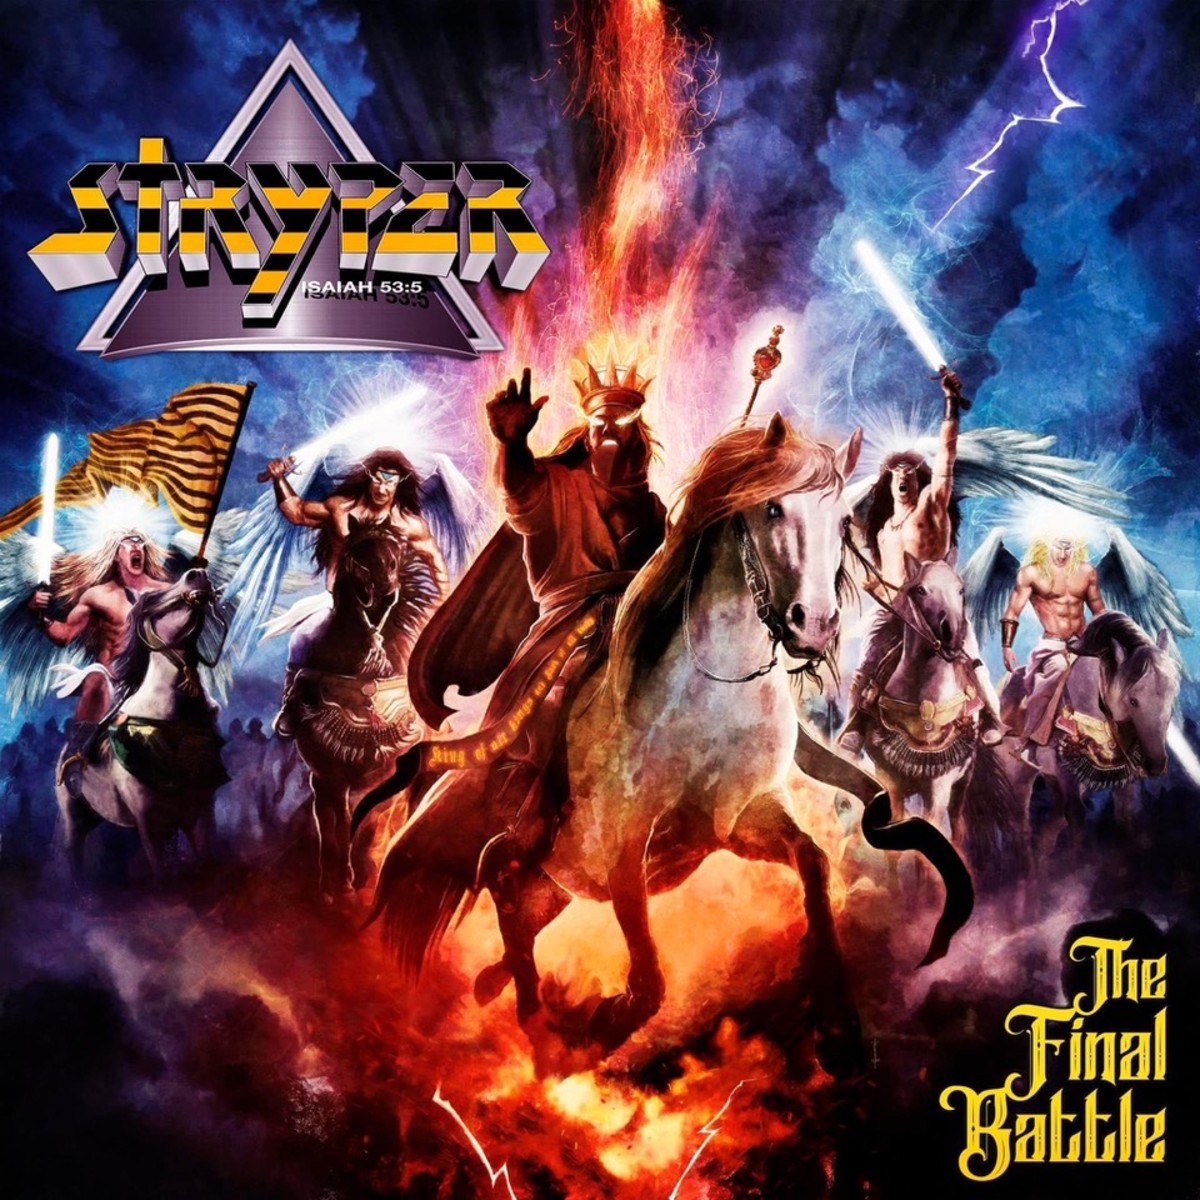 Stryper album The Final Battle, released October 21, 2022 as a 2-LP set.